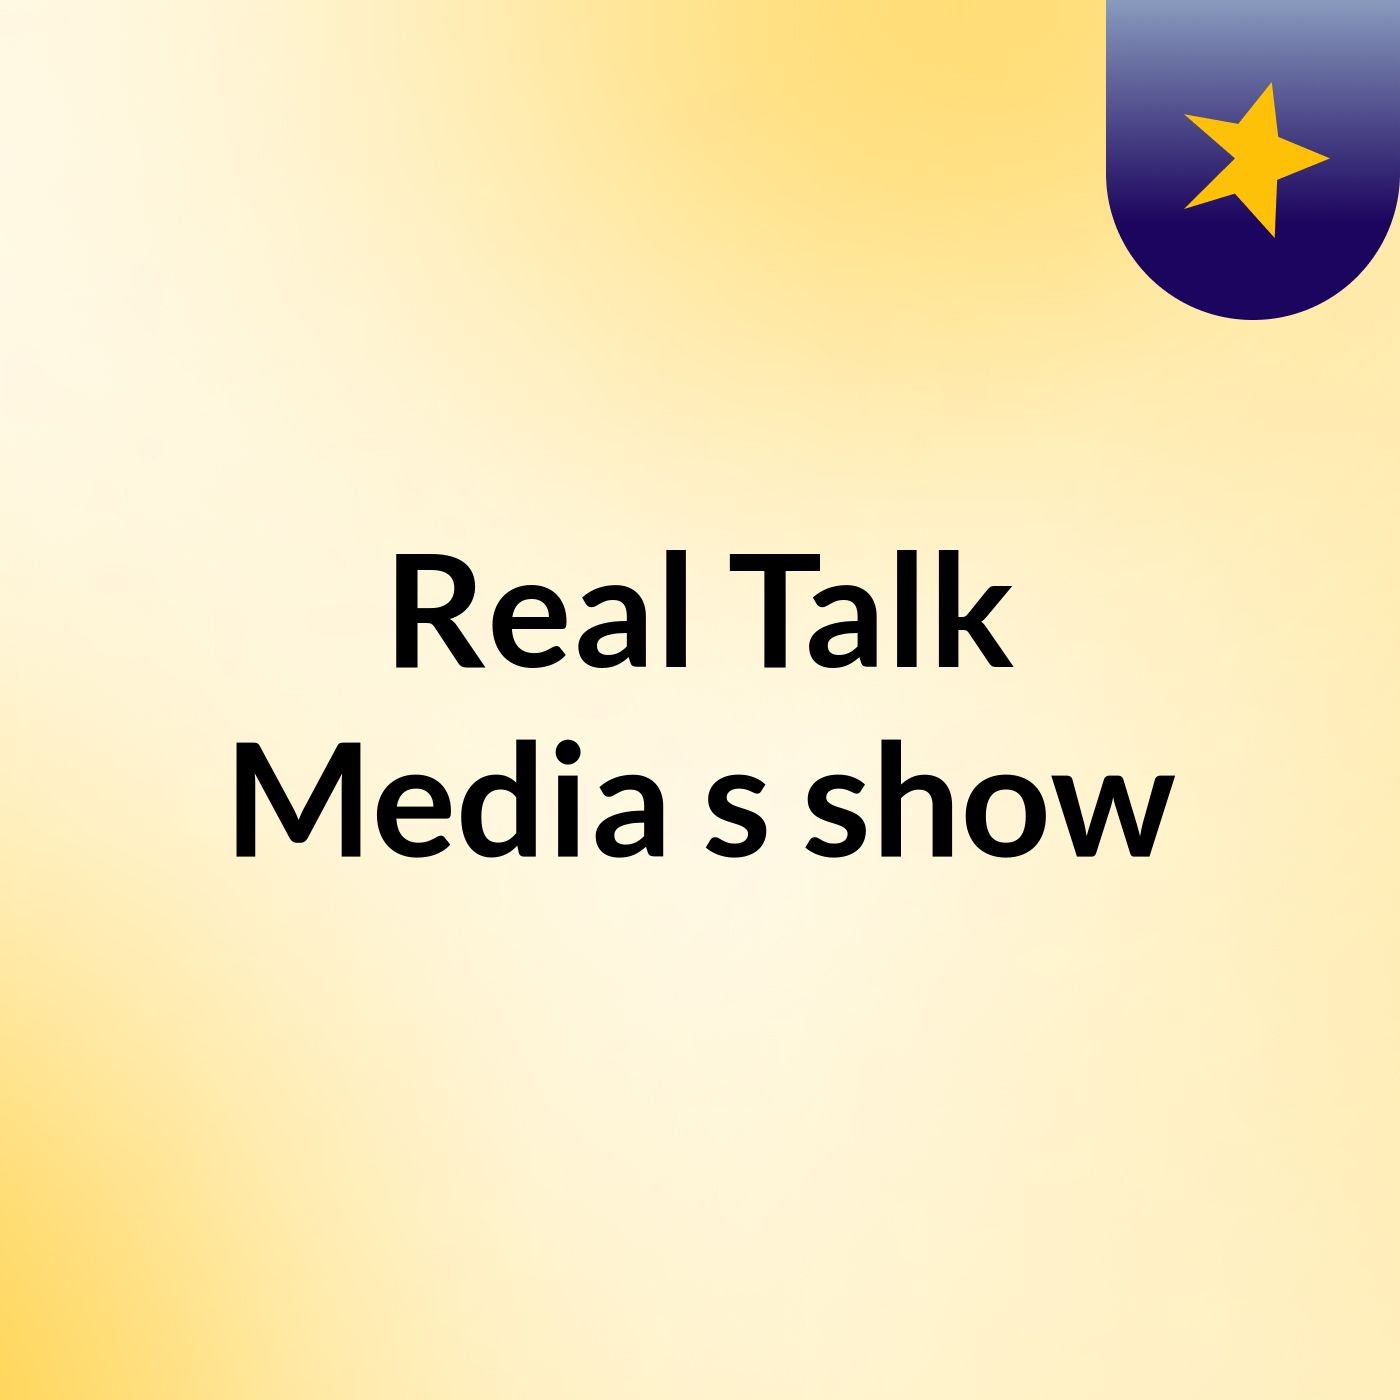 Real Talk Media's show